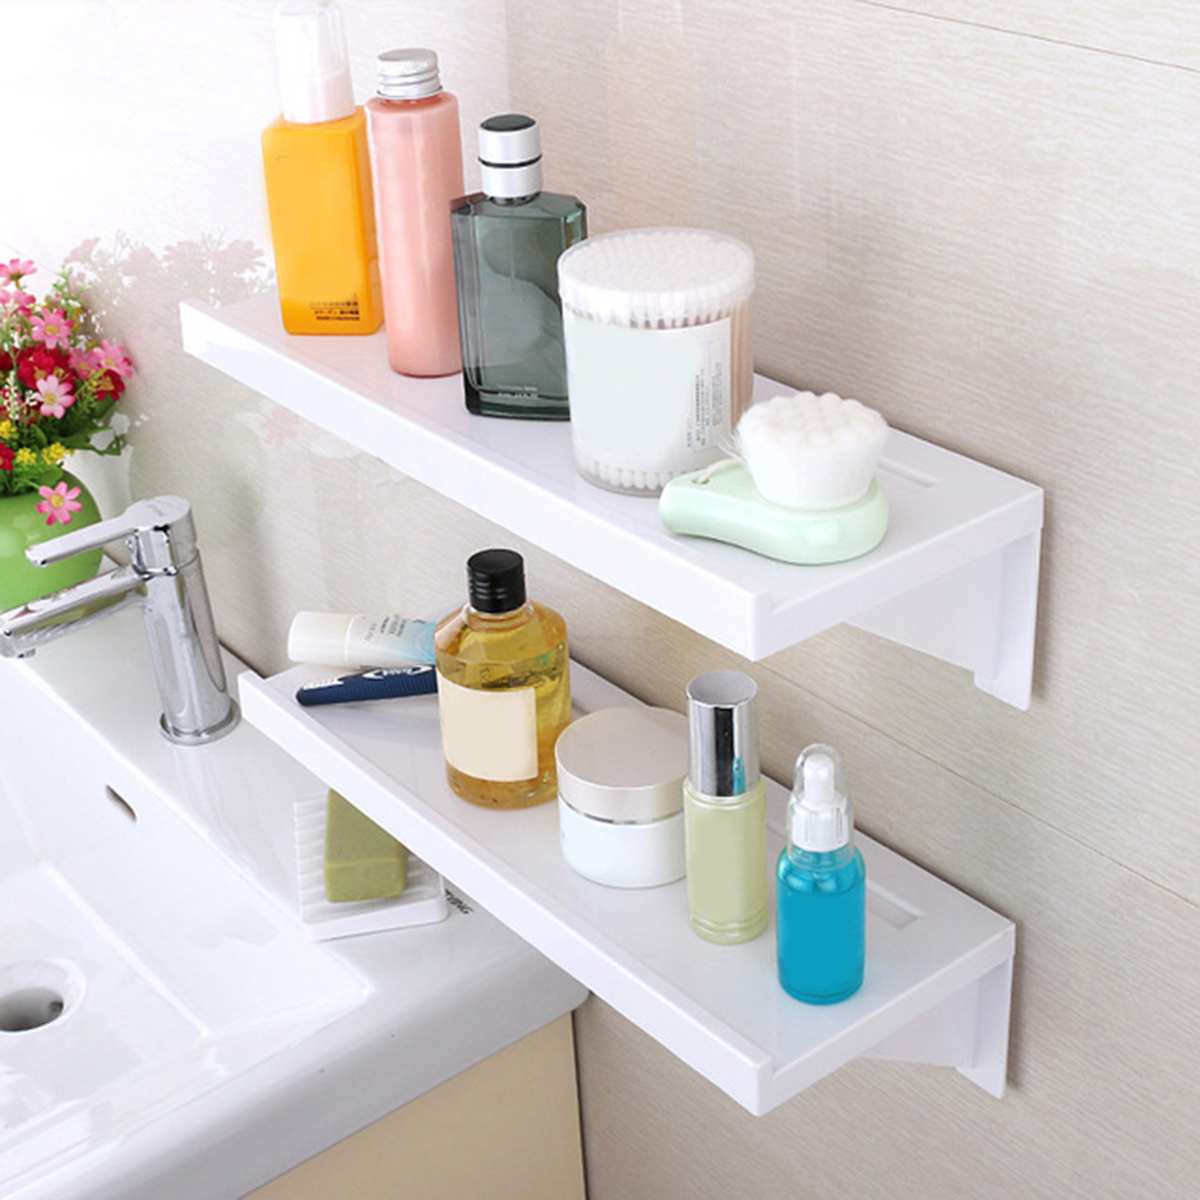 https://www.joopzy.com/wp-content/uploads/2019/12/Single-Tier-Suction-Cup-Bathroom-Shelf-Wall-Rack-Plastic-Shower-Caddy-Organizer-Holder-Tray-Kitchen-Lotion.jpg